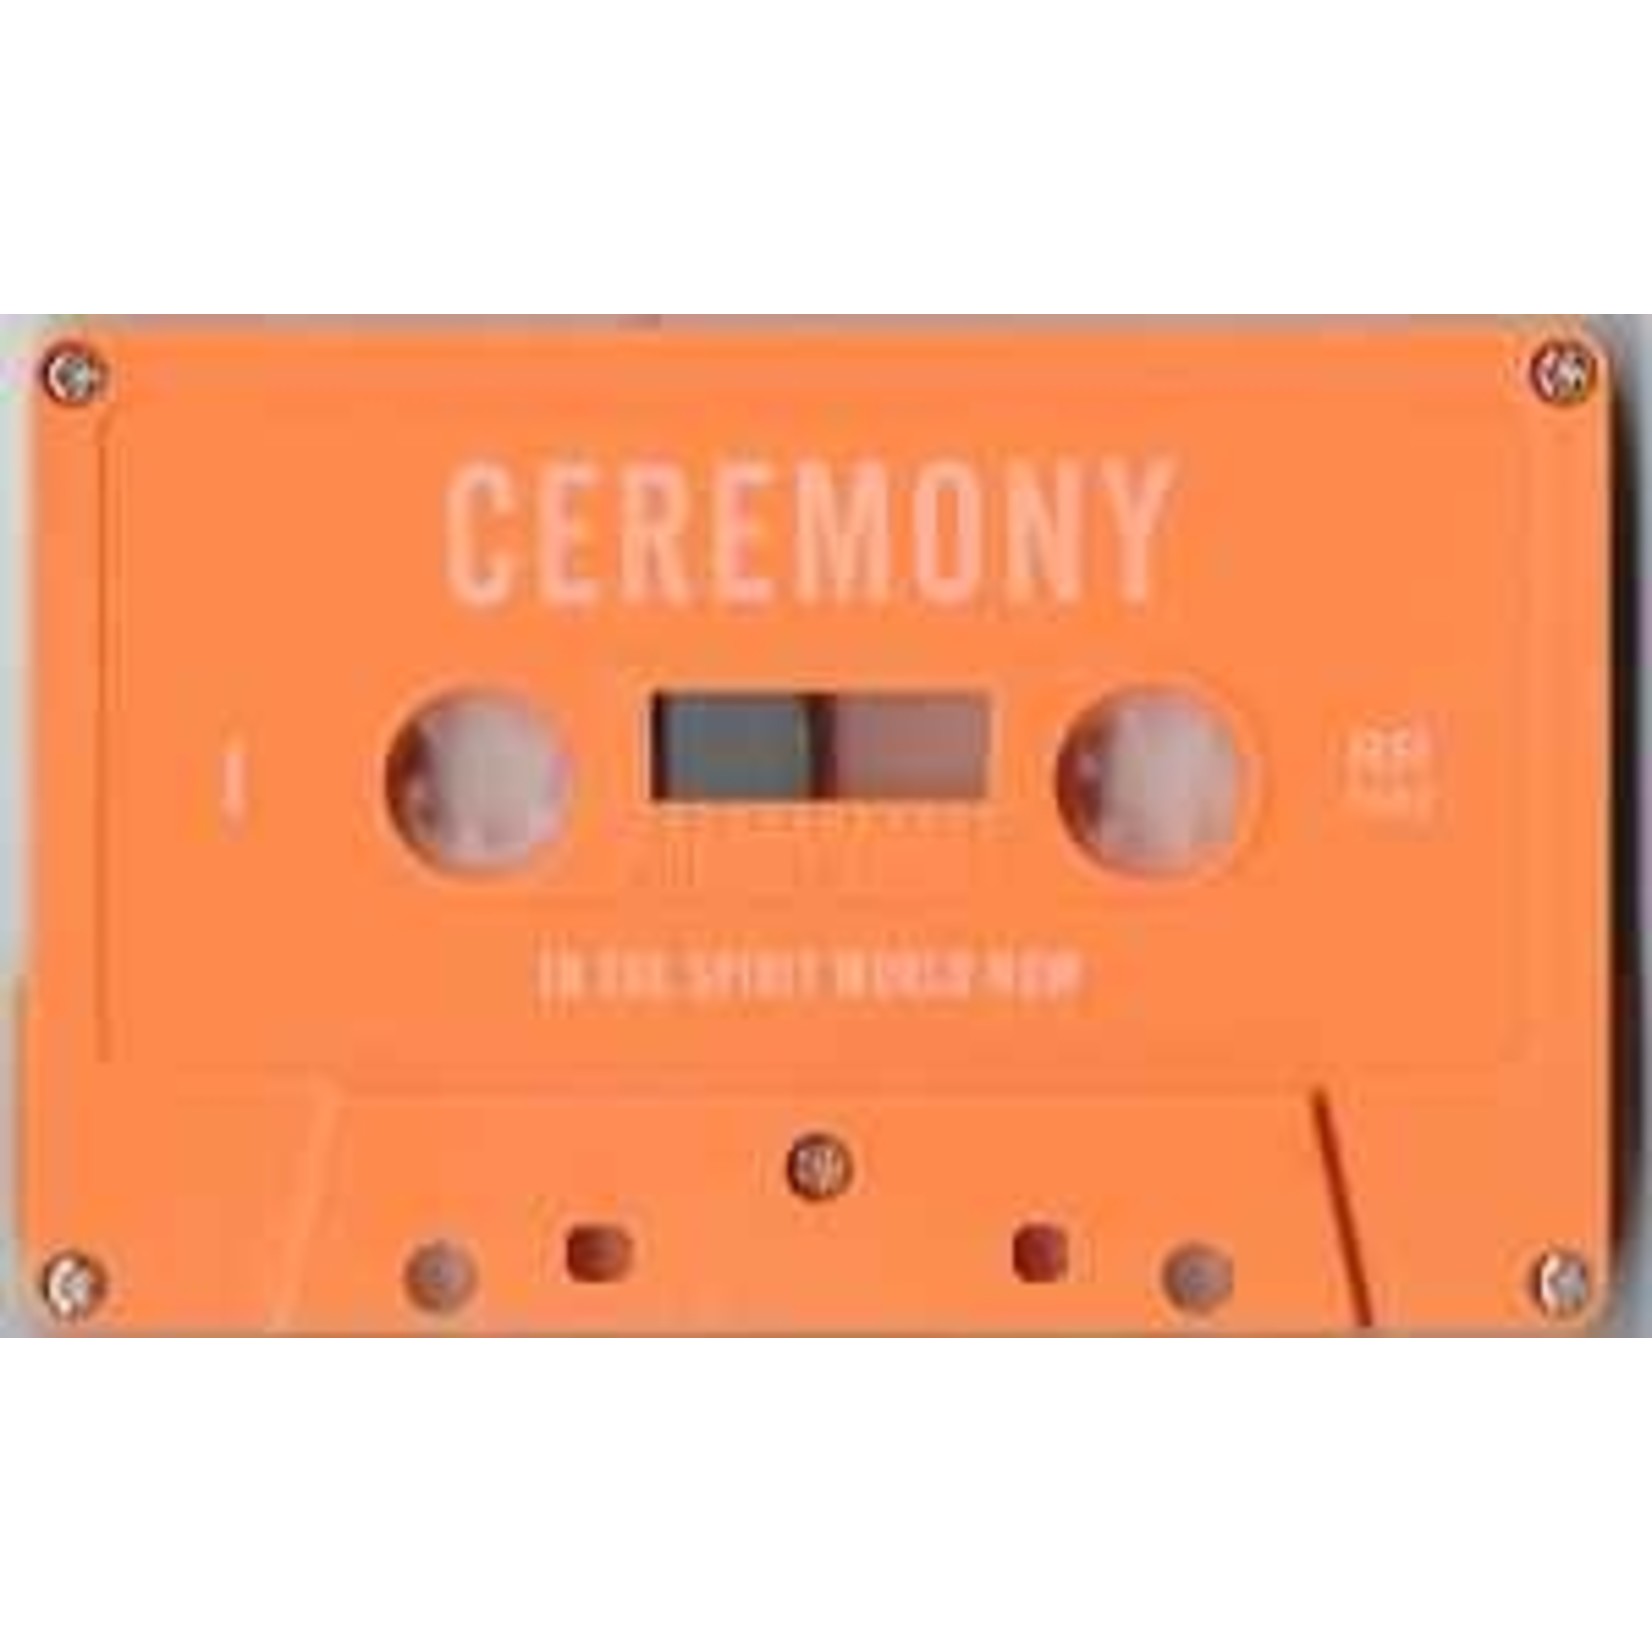 Relapse Ceremony - In The Spirit World Now (Tape) [Orange]